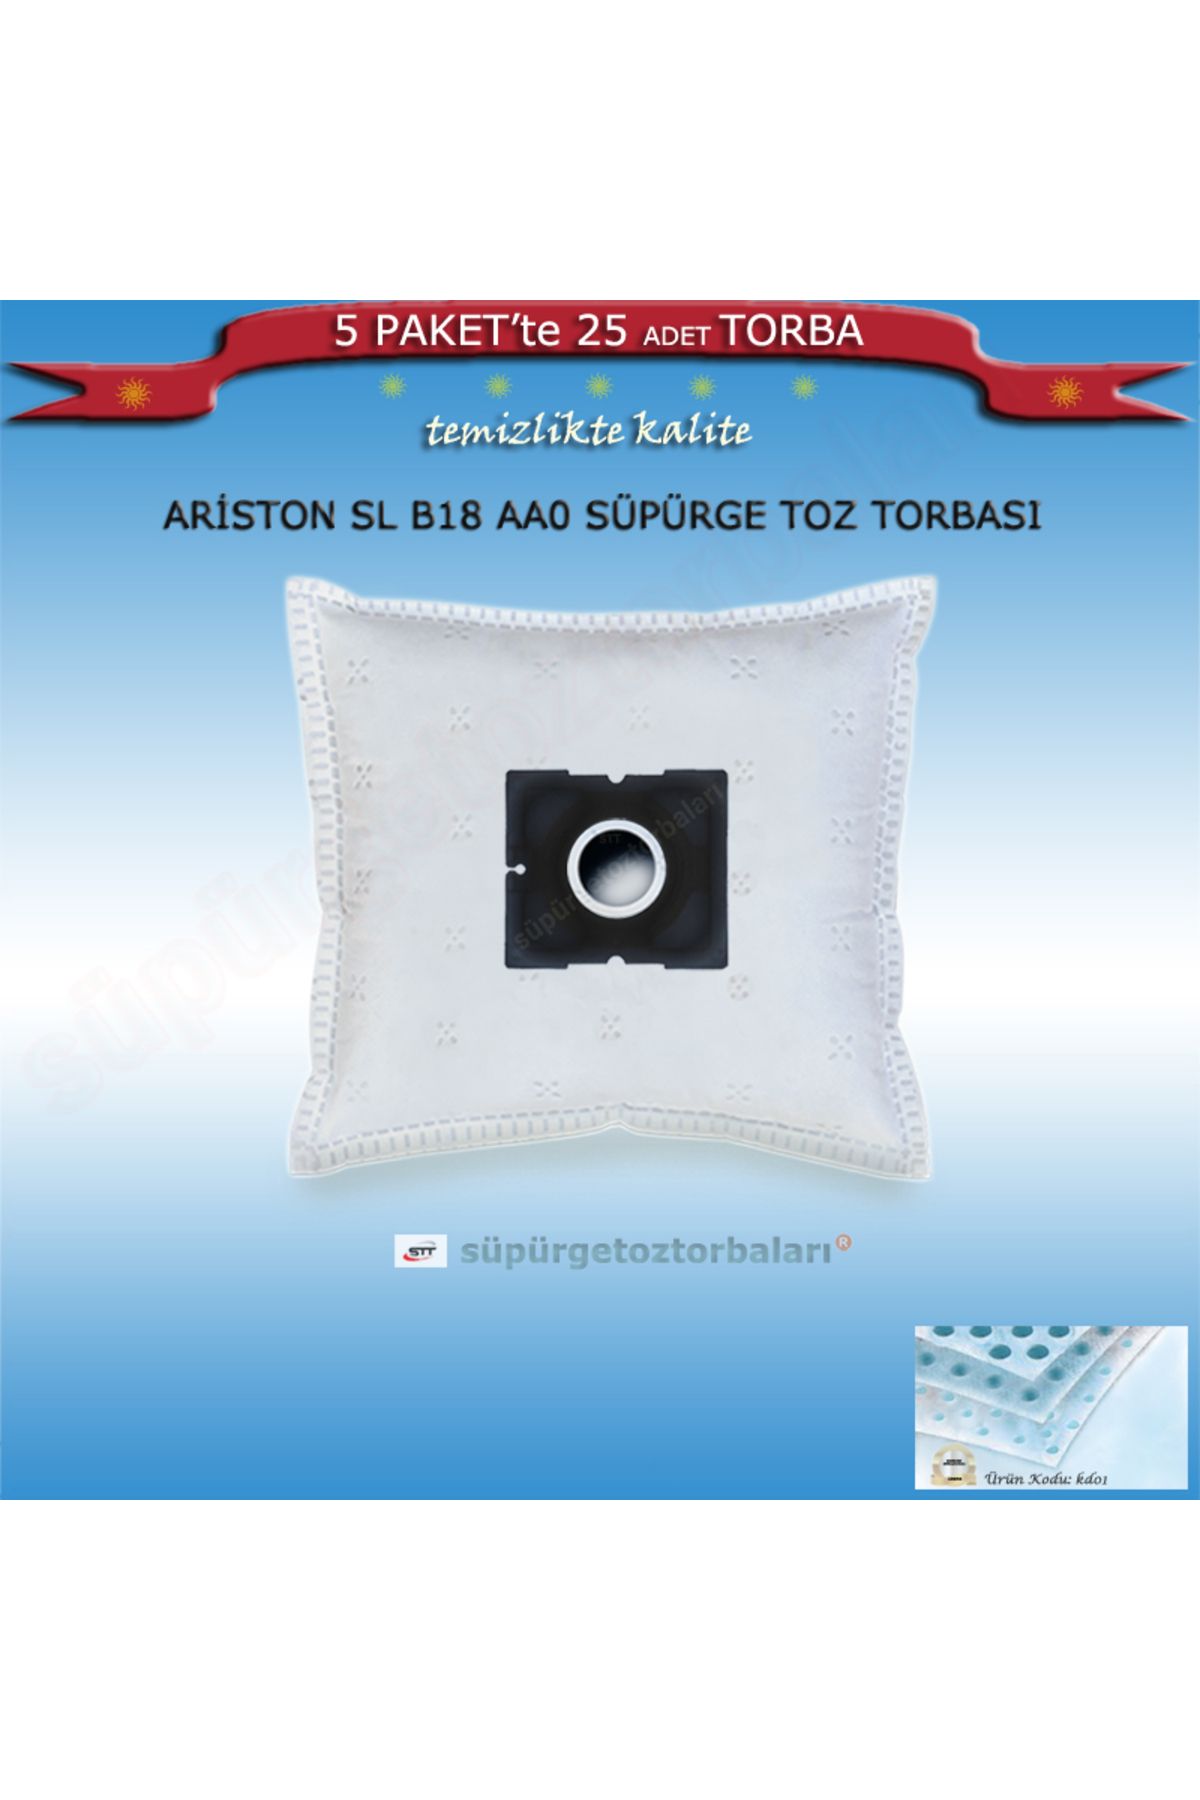 Ariston Sl B18 Aa0 Süpürge Toz Torbası 25 Adet Torba Kd01